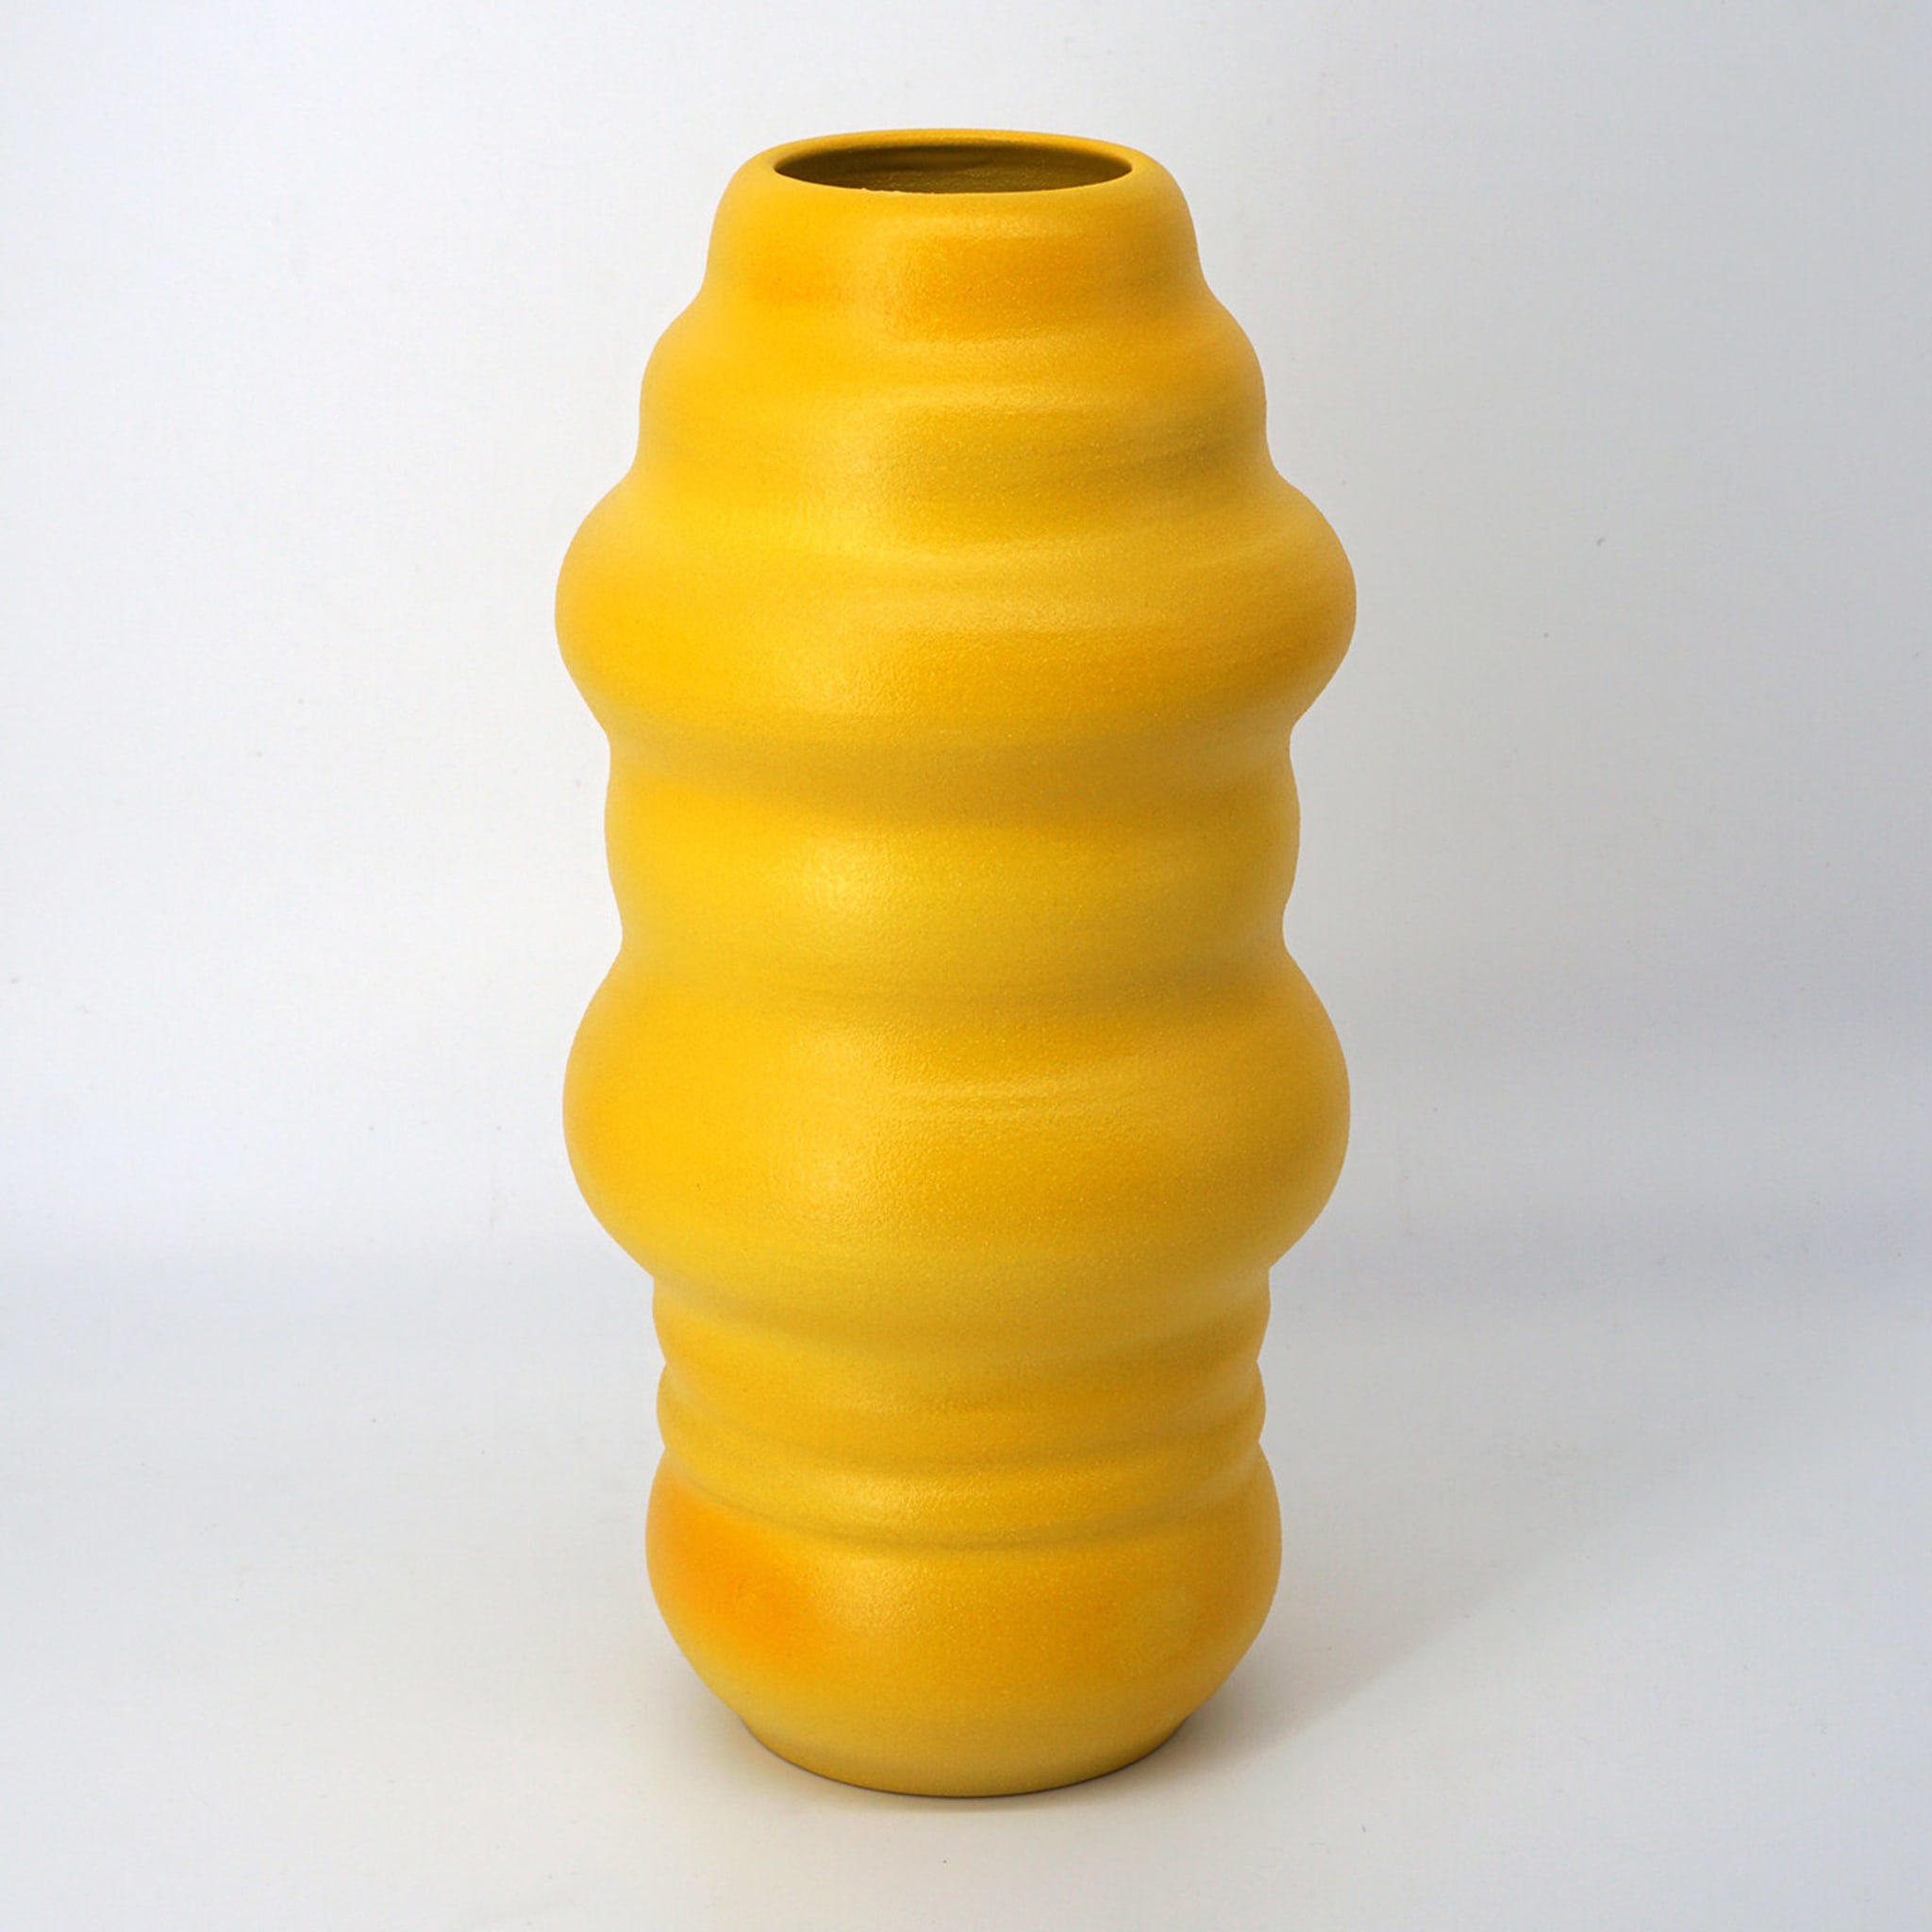 Crisalide Yellow Vase #1 - Alternative view 1